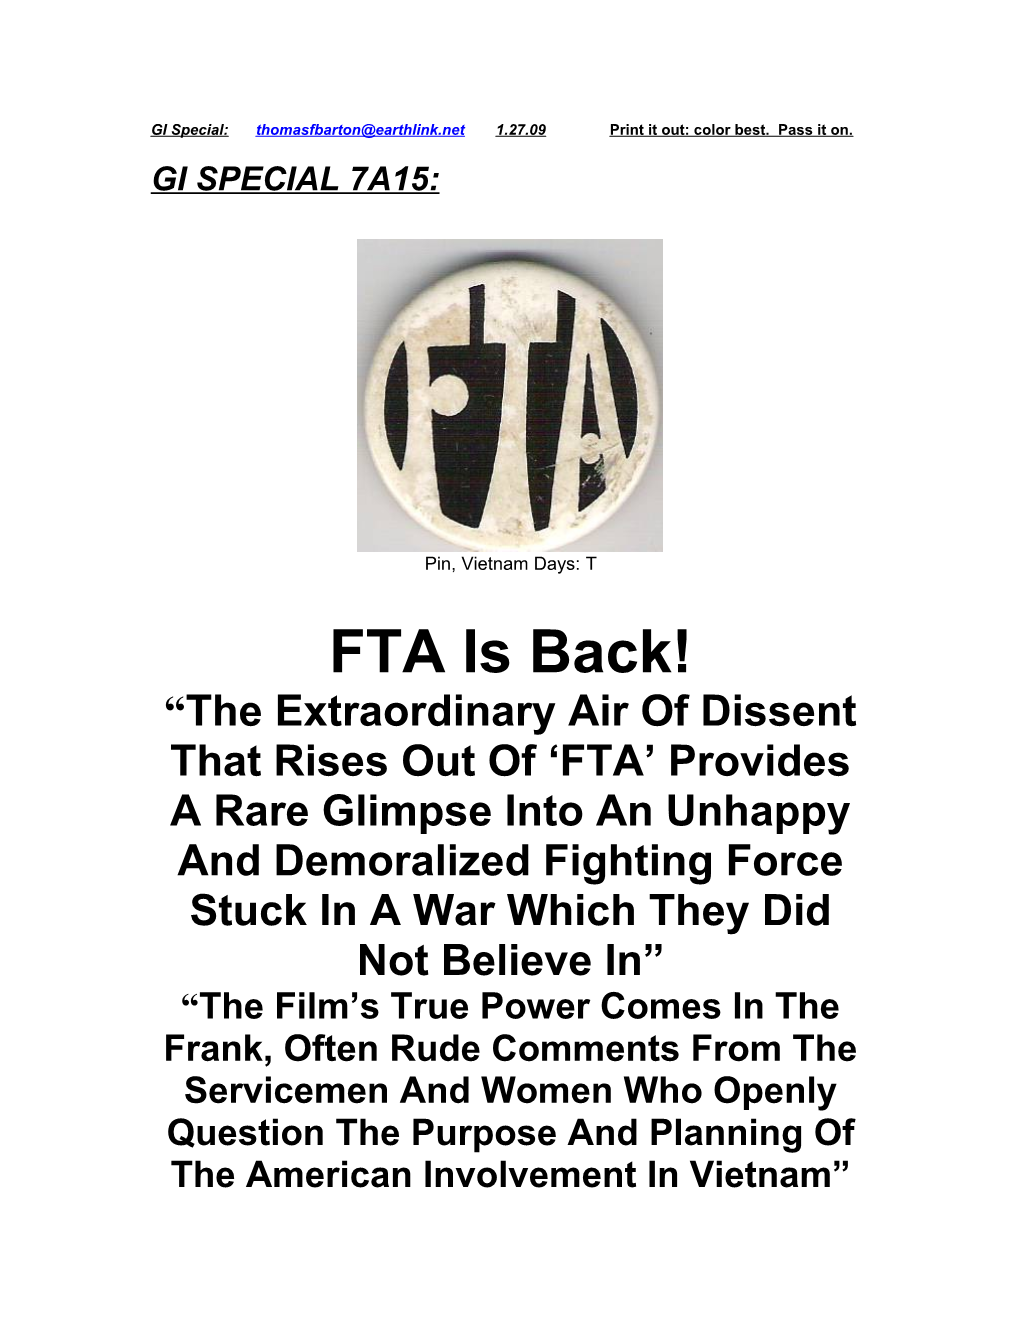 Premiere Screenings of FTA in Los Angeles and New York